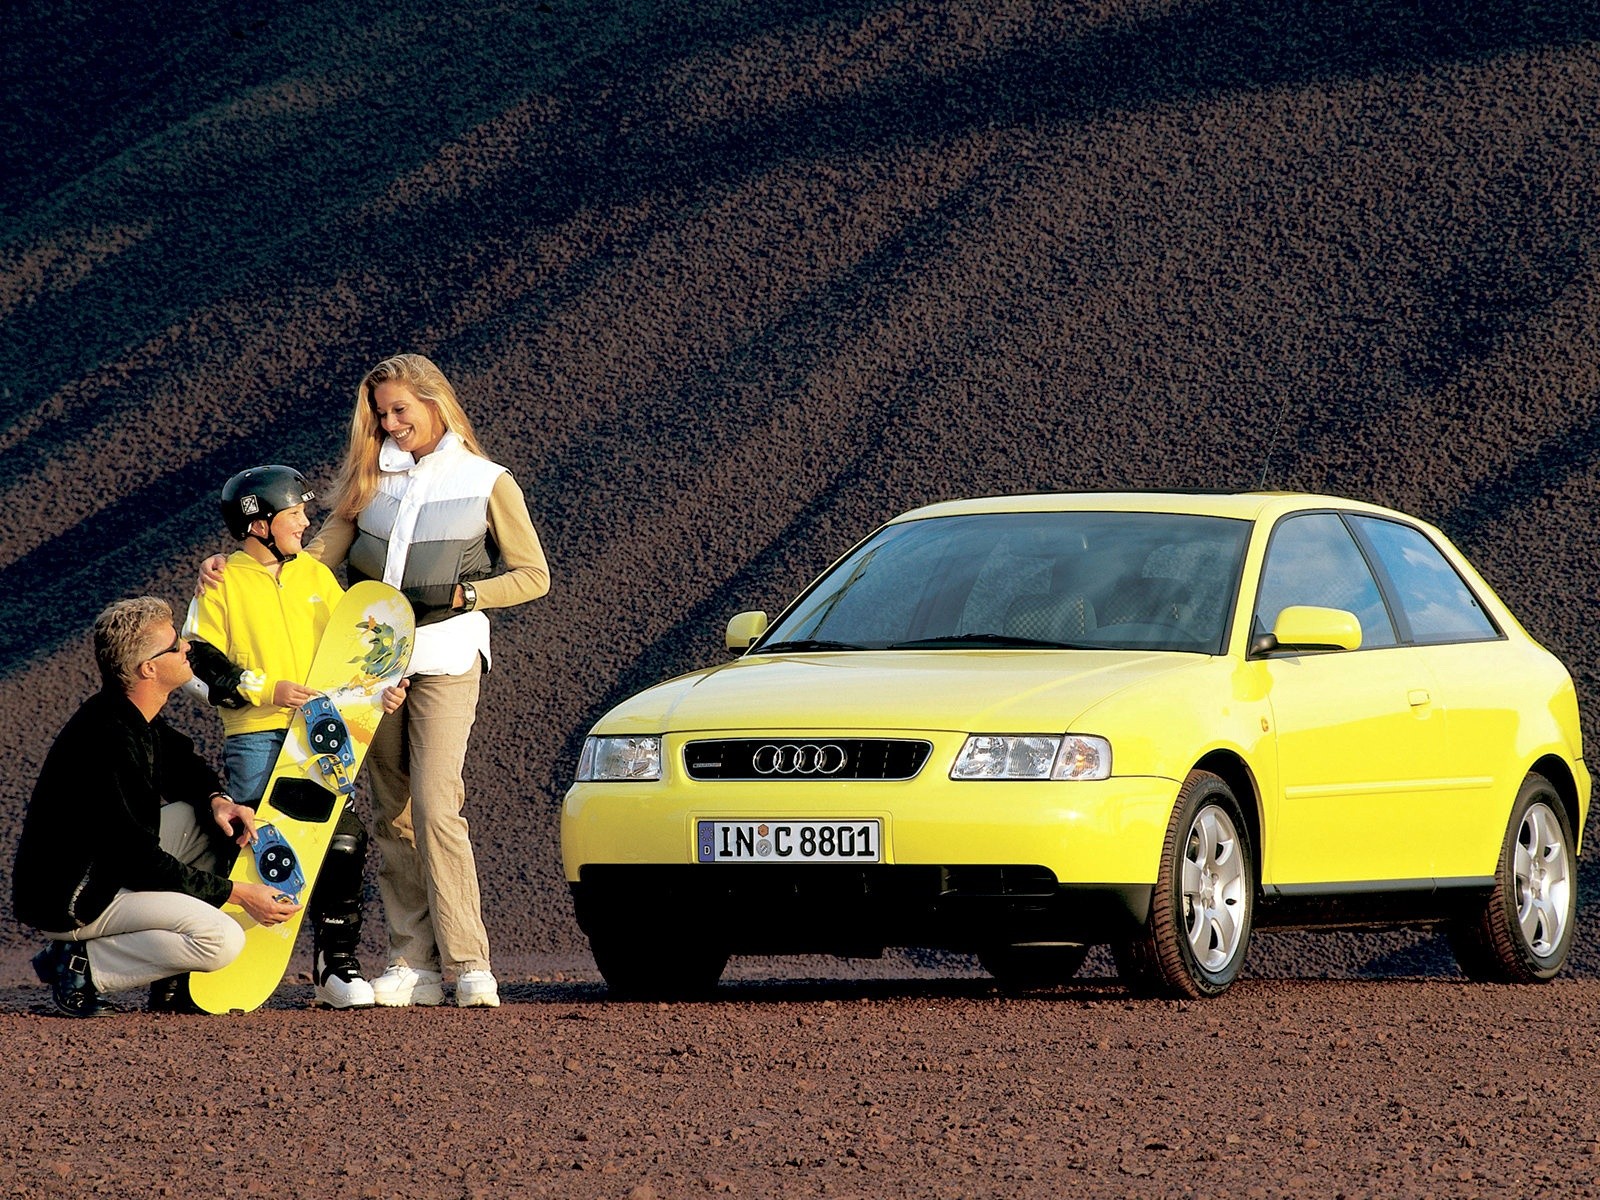 File:1997 Audi A3 (8L) 1.6 3-door hatchback (26381040274).jpg - Wikipedia